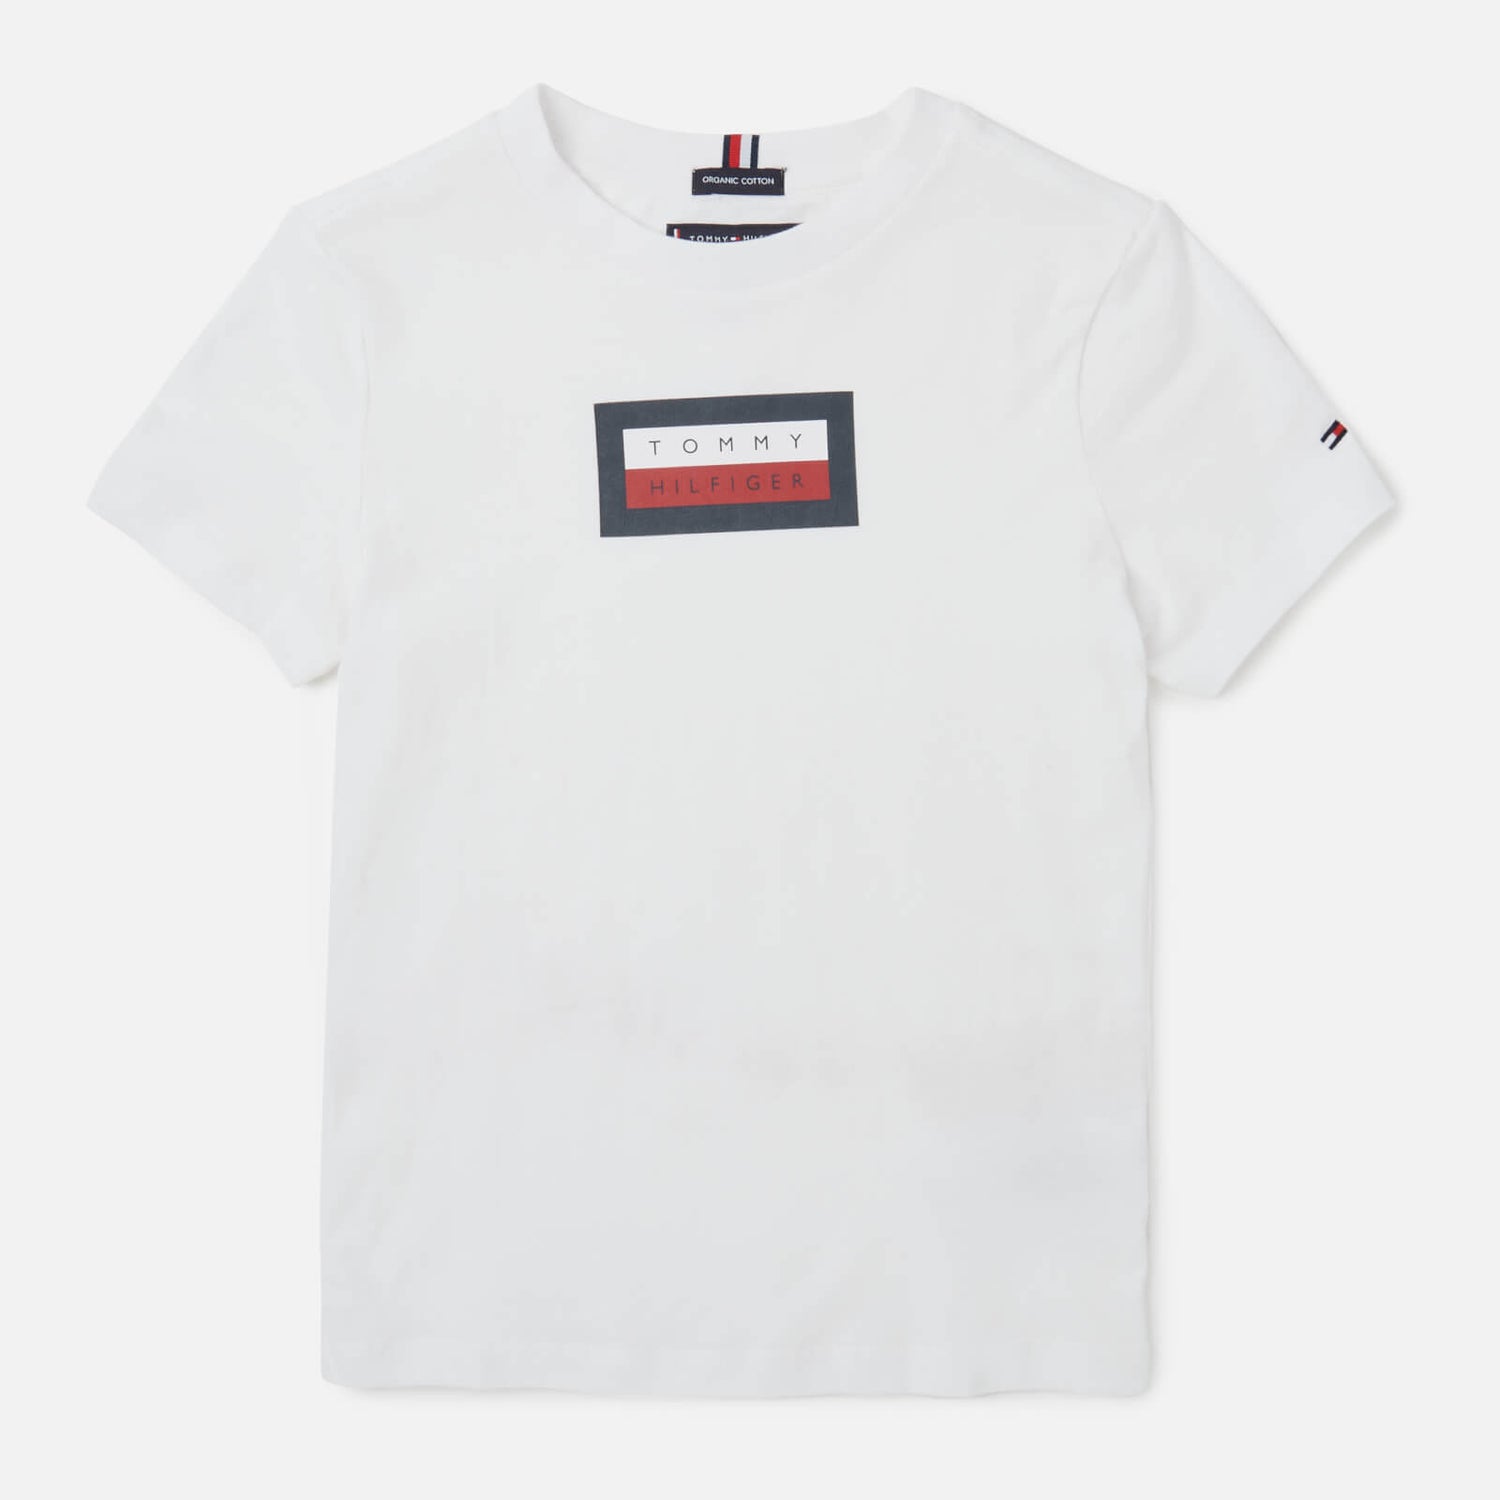 Tommy Hilfiger Boys' Hilfiger Graphic T-Shirt - White